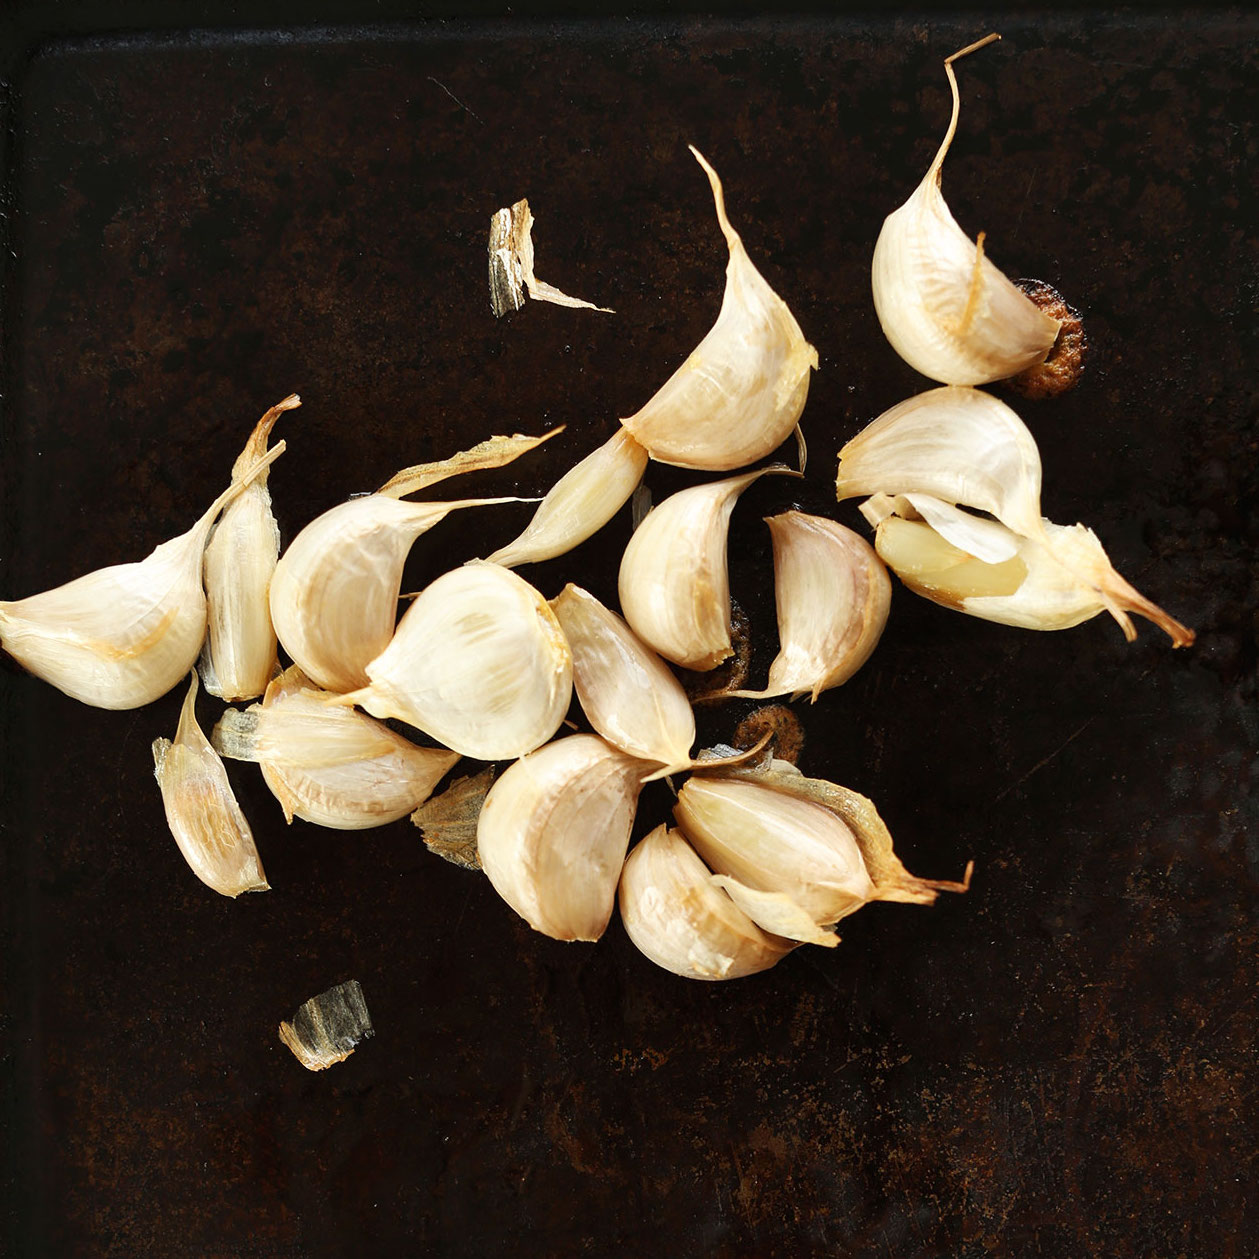 How to Roast Garlic - Make Roasted Garlic Without Foil 5 Ways